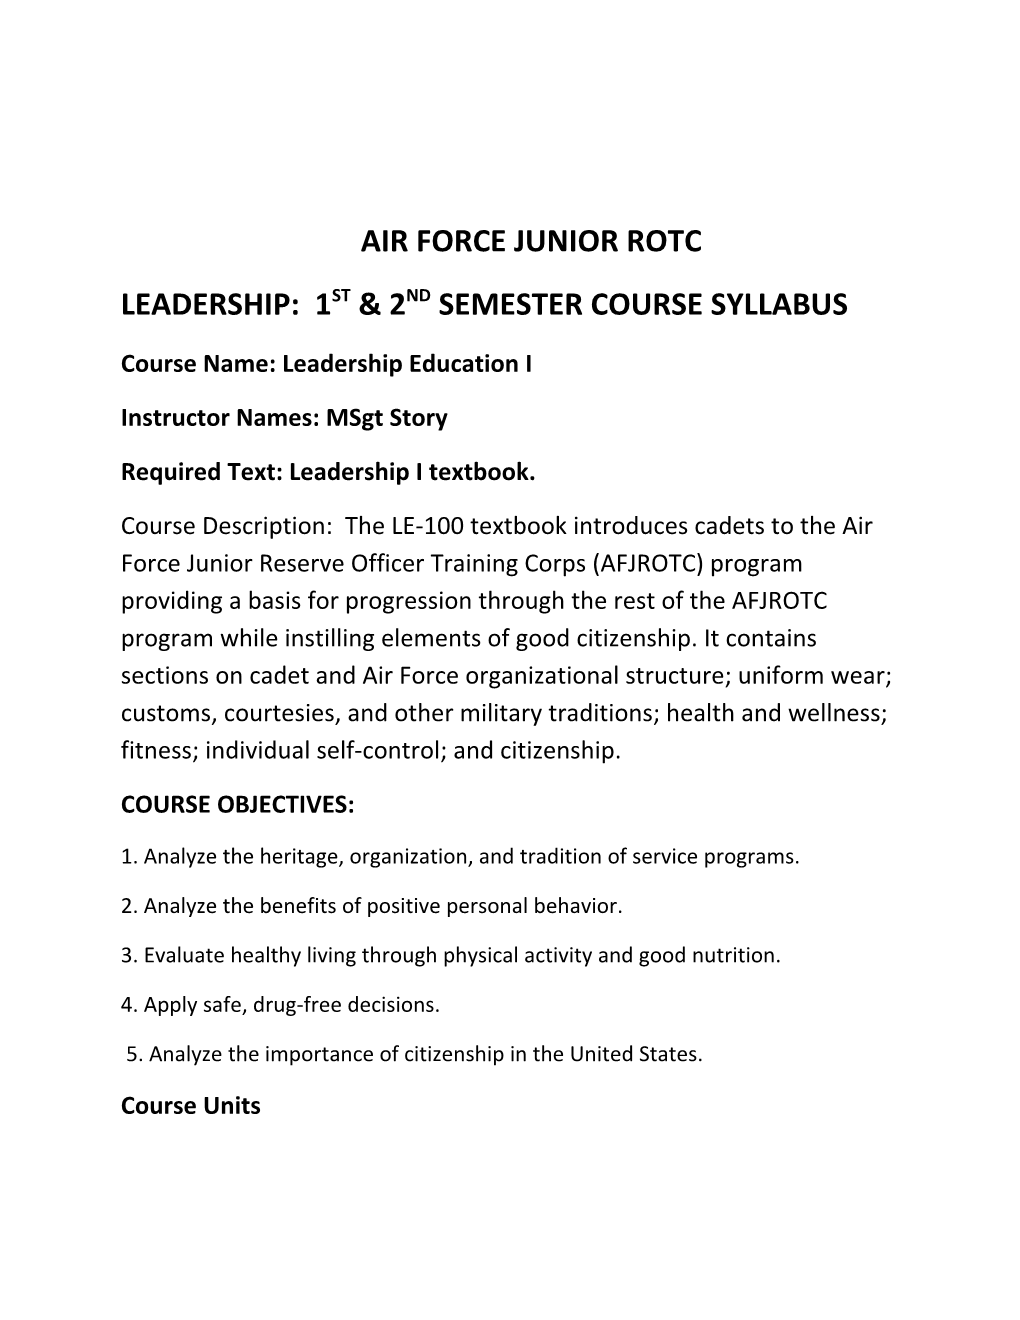 Leadership: 1St & 2Nd Semester Course Syllabus